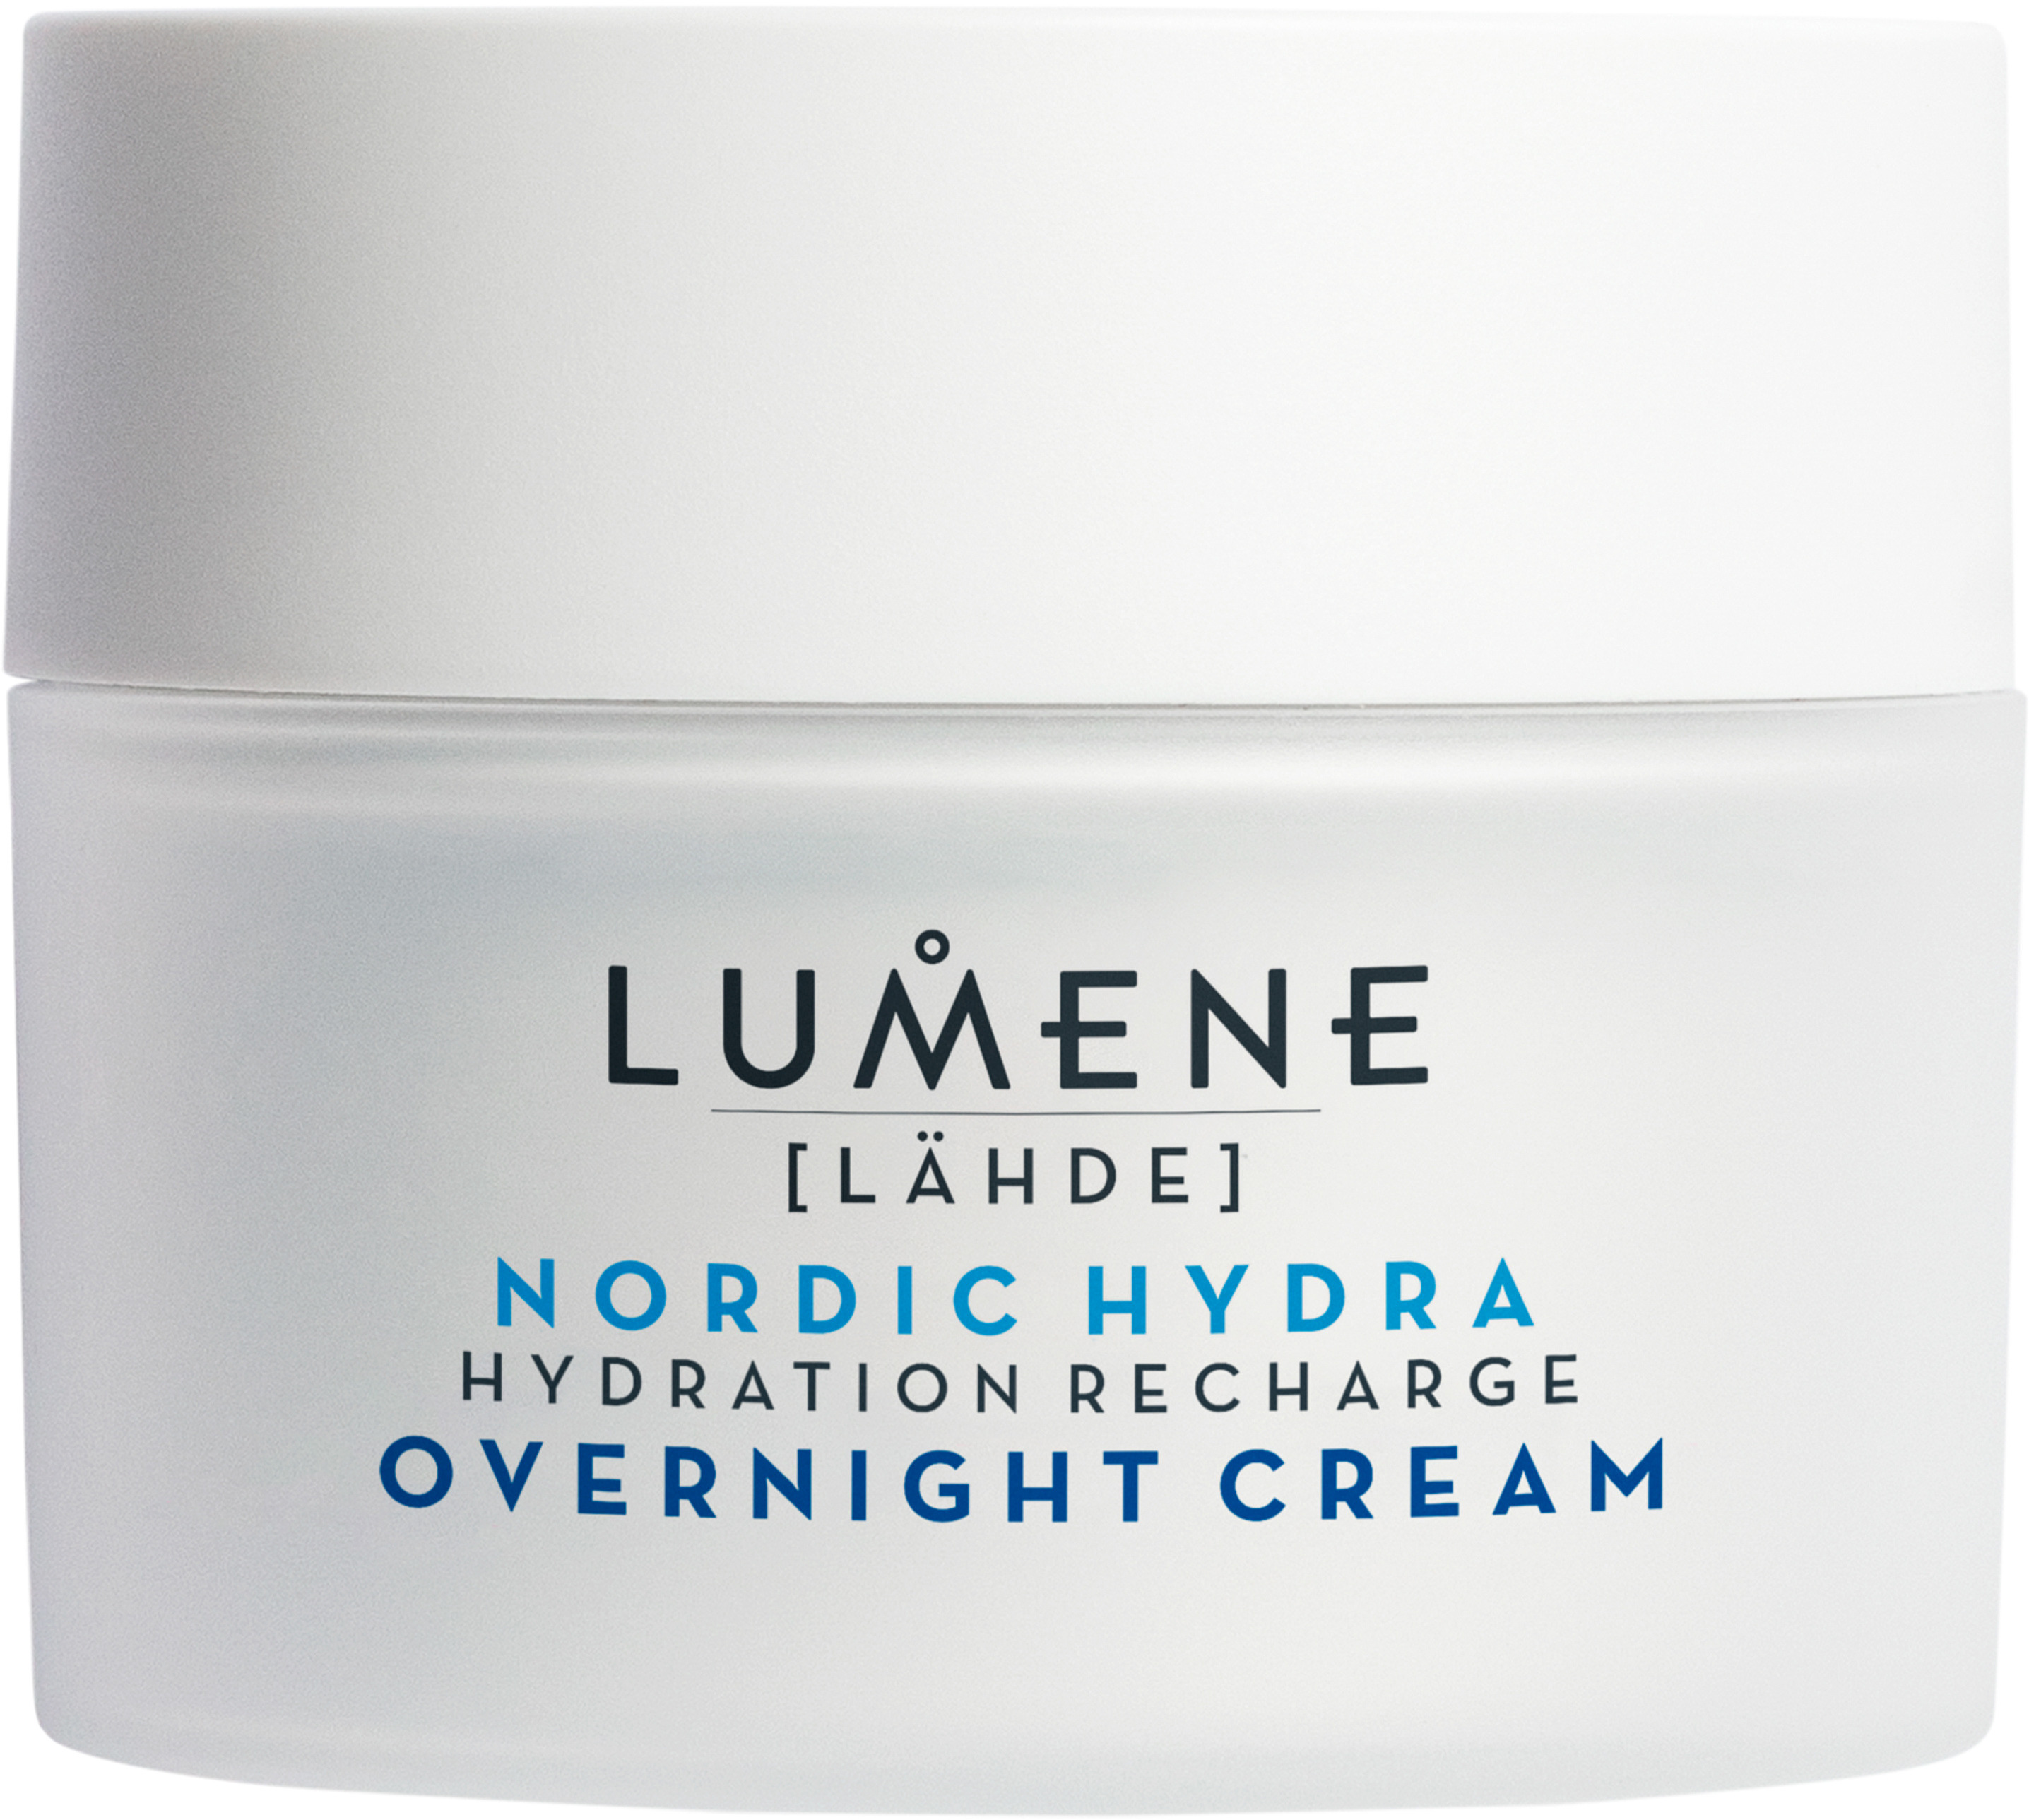 Lumene Nordic Hydra Hydration Recharge Overnight Cream 50 ml